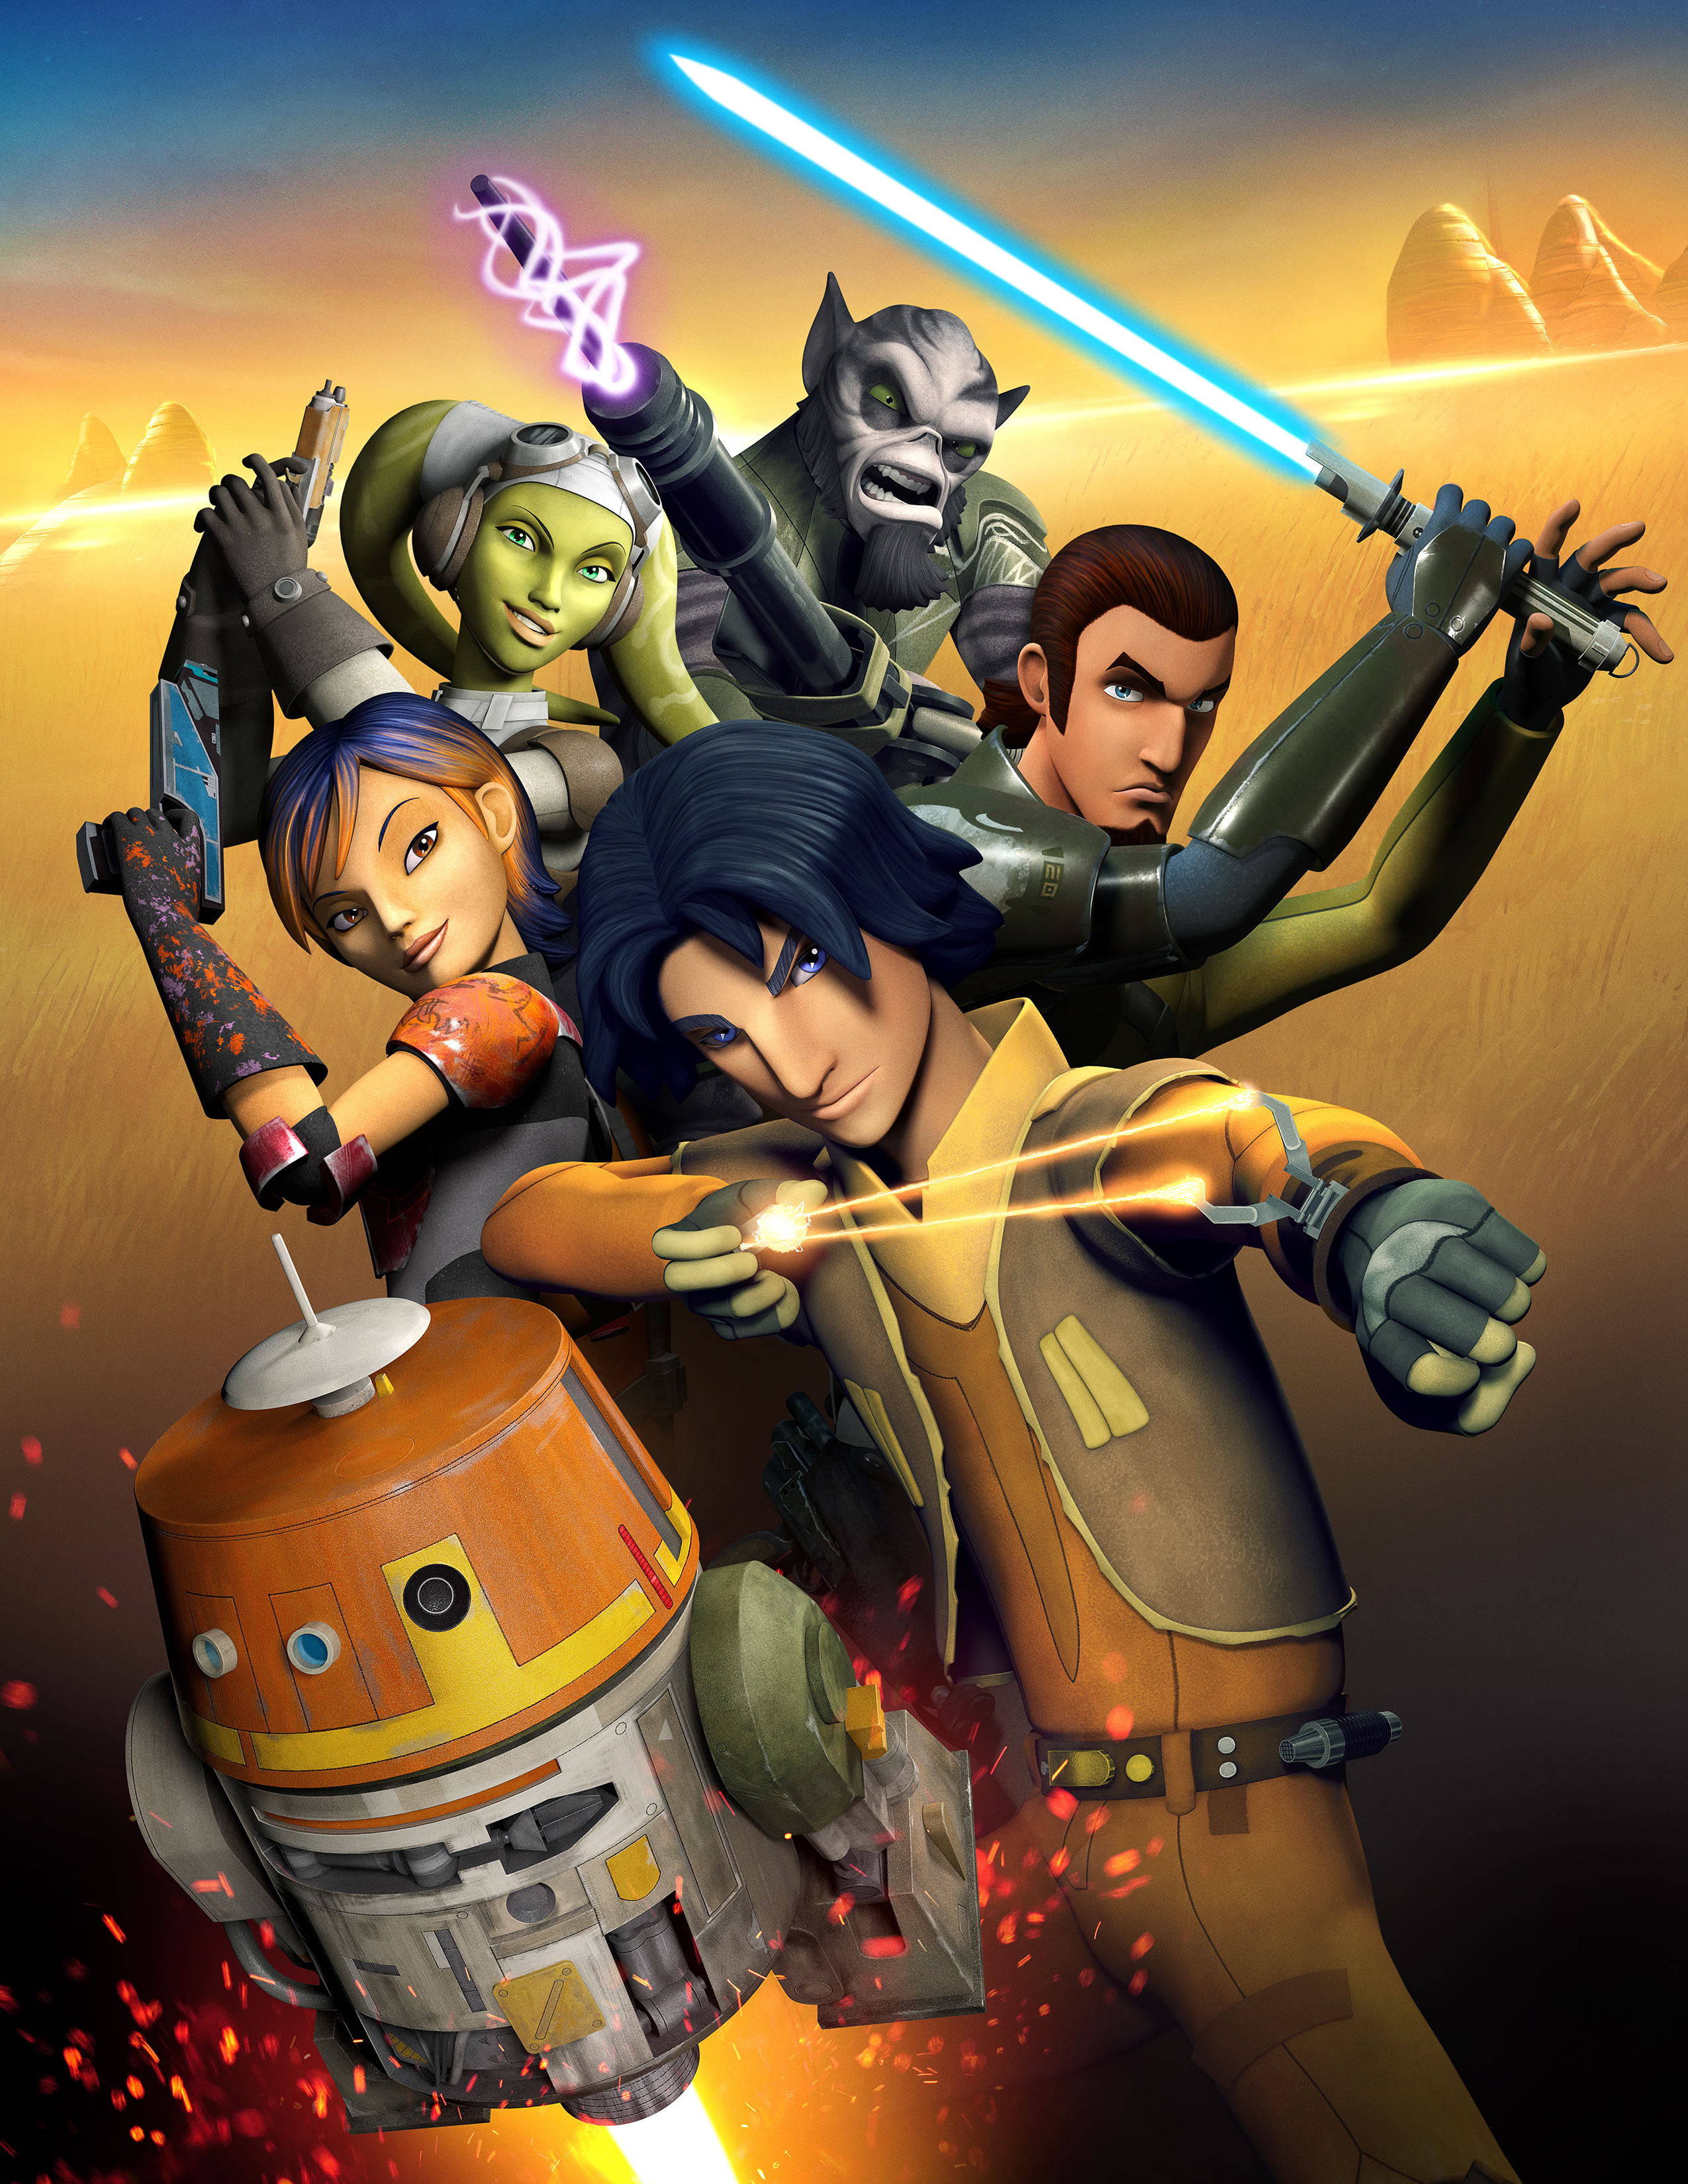 Star Wars Rebels #8